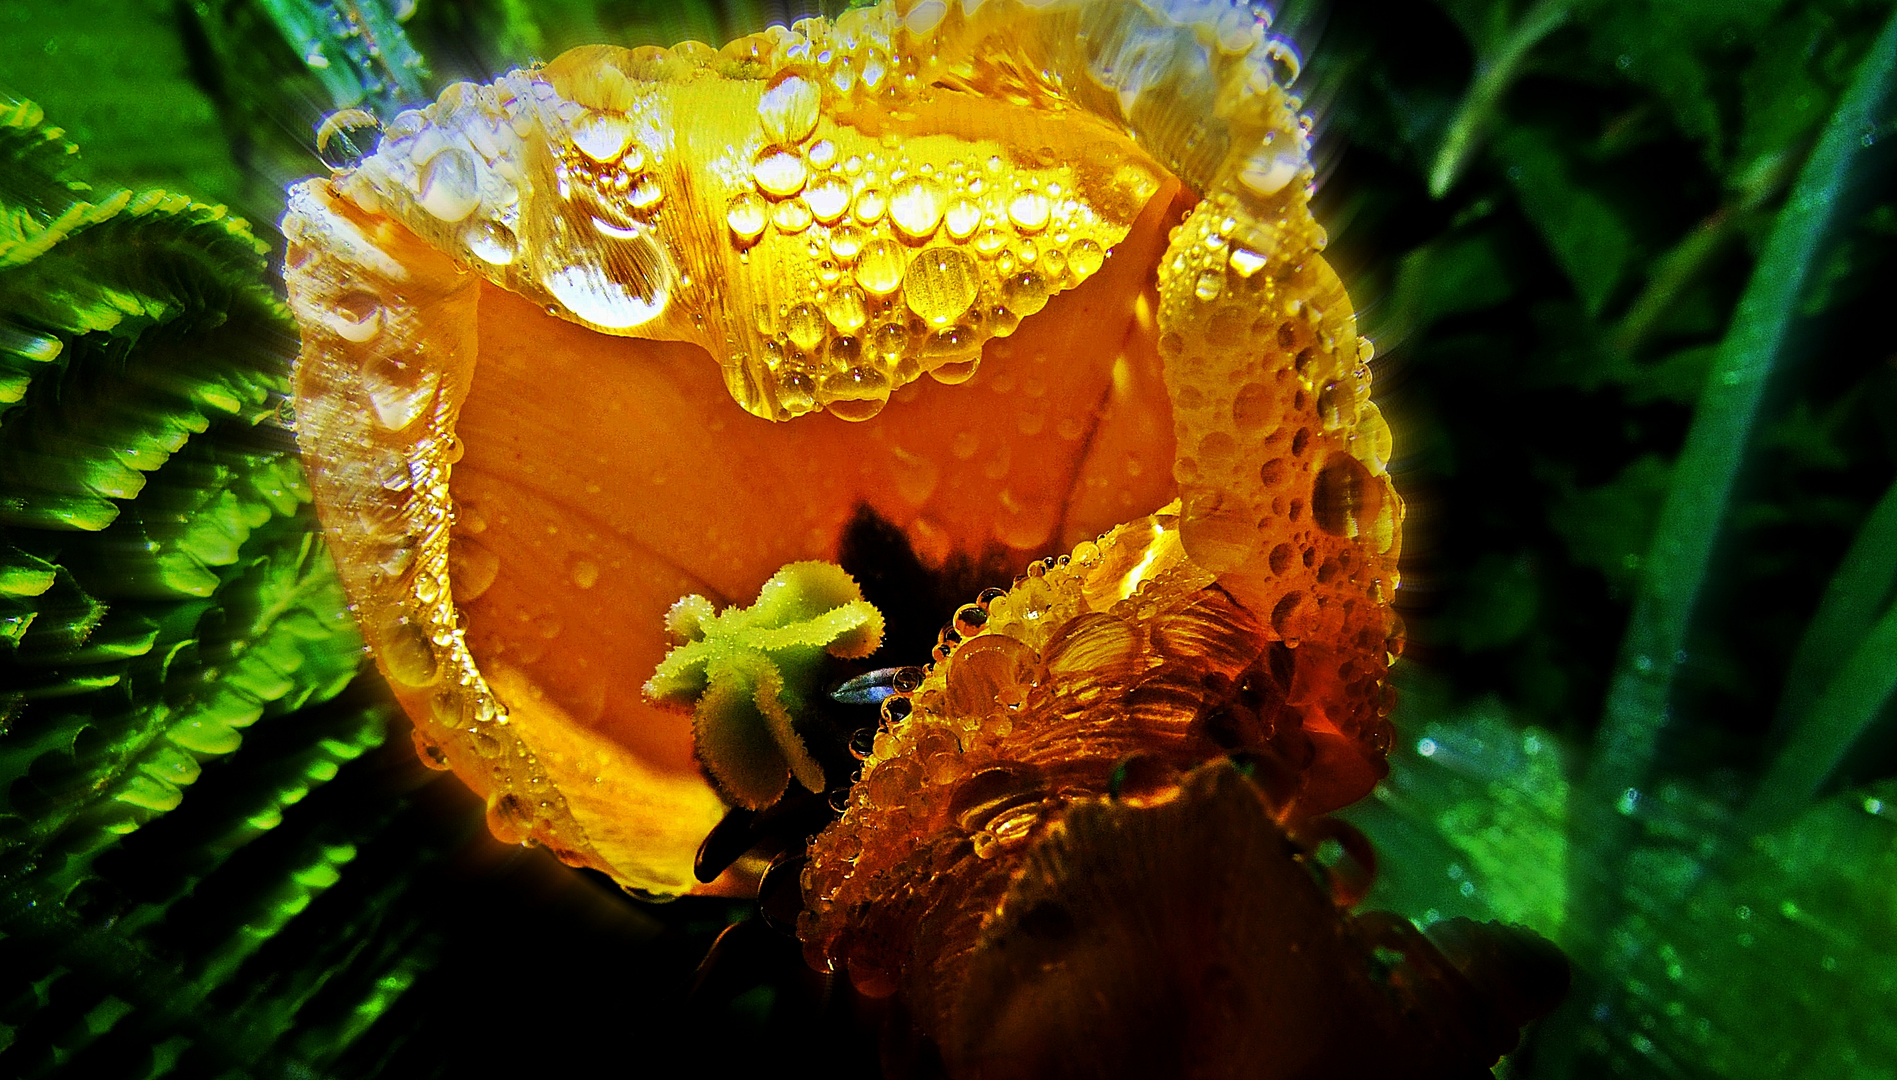 gelbe Tulpe mit Regentropfen (yellow tulip with raindrops)